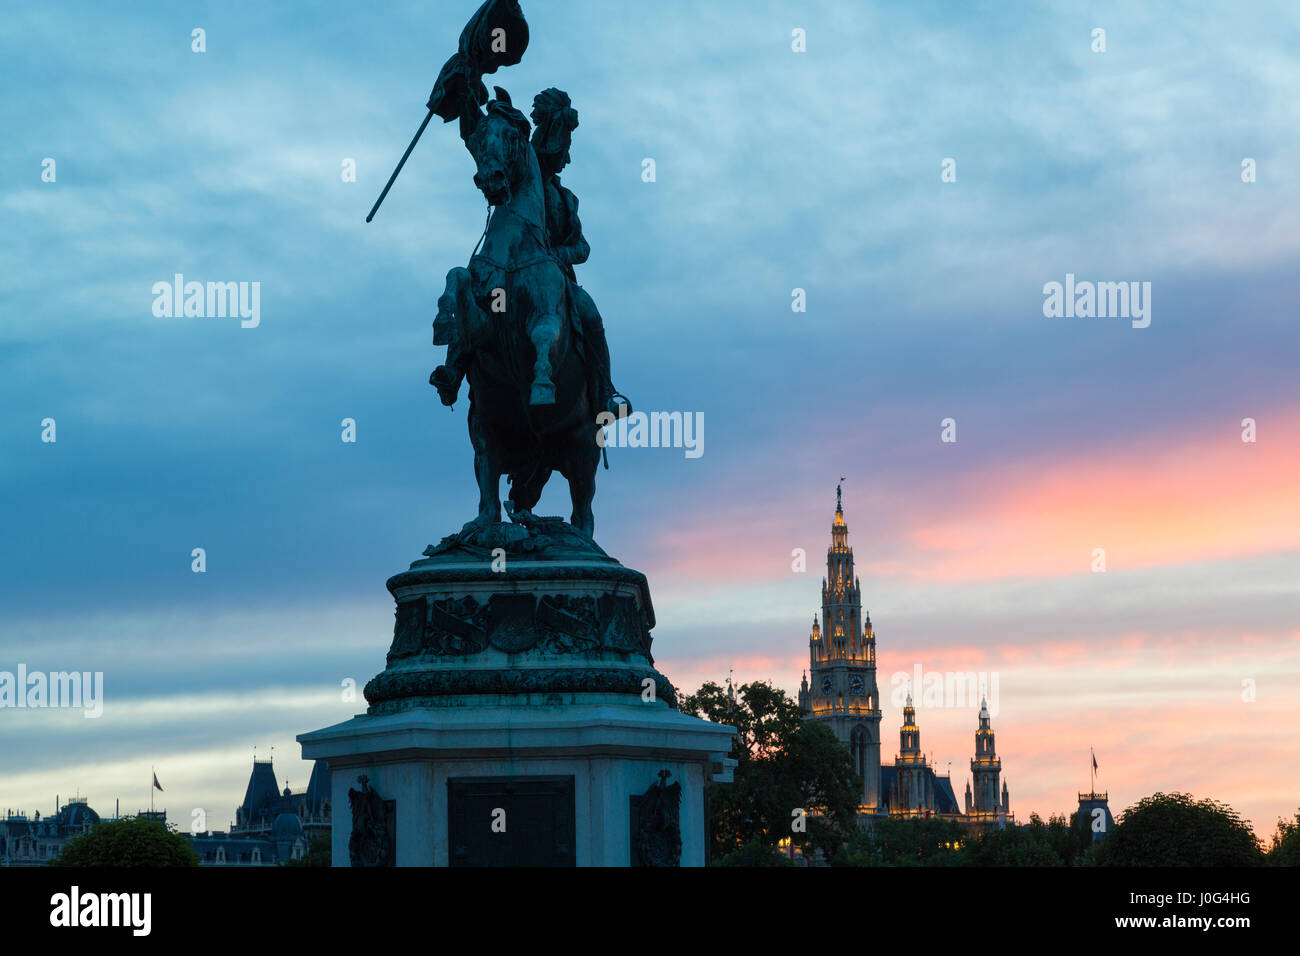 Kaiser Franz Joseph I statue with parliament building in background, Vienna, Austria Stock Photo